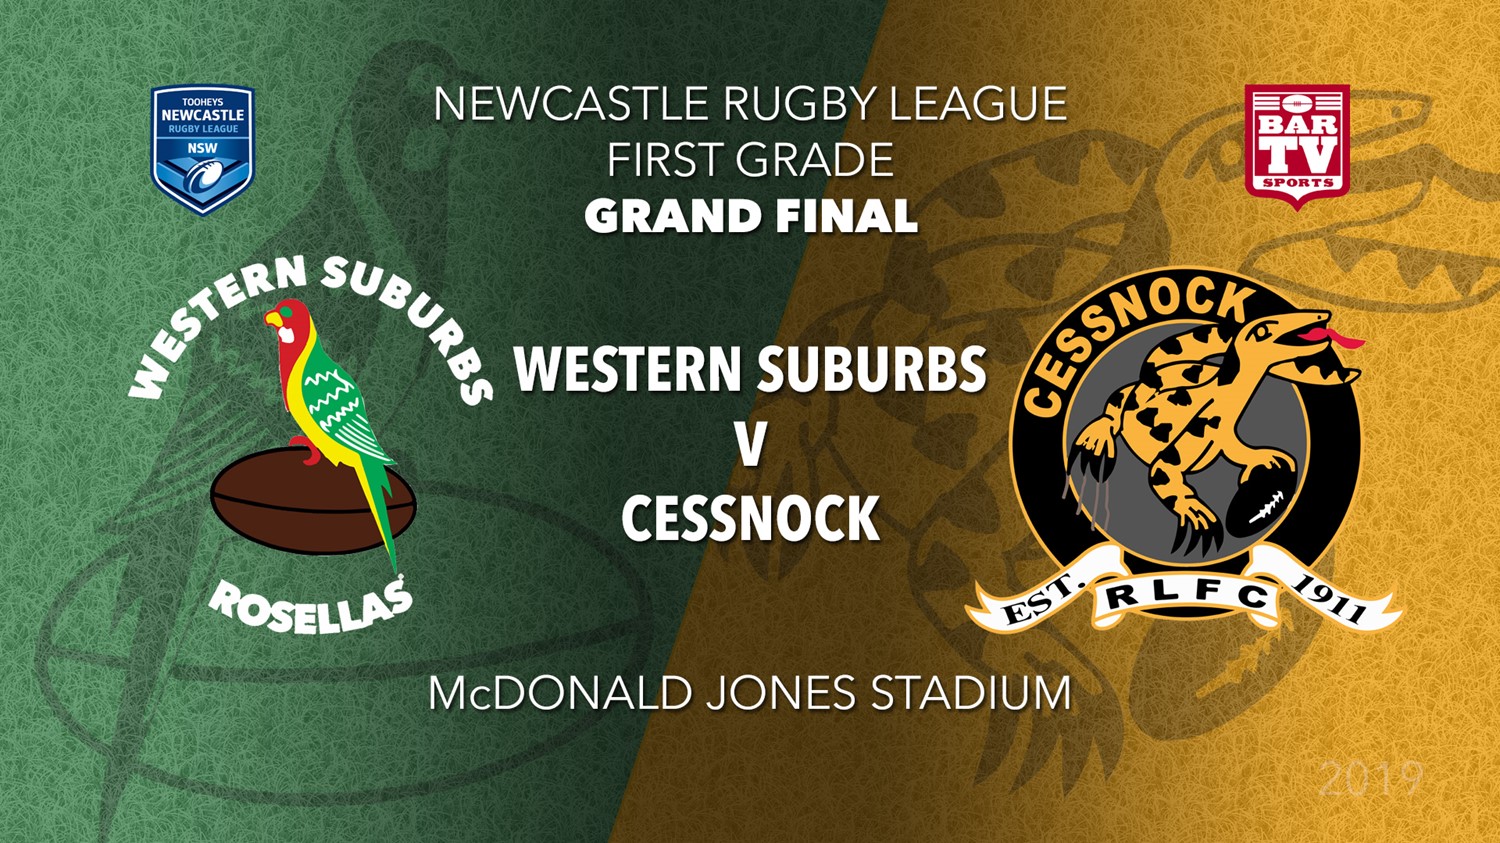 2019 Newcastle Rugby League Grand Final - 1st Grade - Western Suburbs Rosellas v Cessnock Goannas Minigame Slate Image